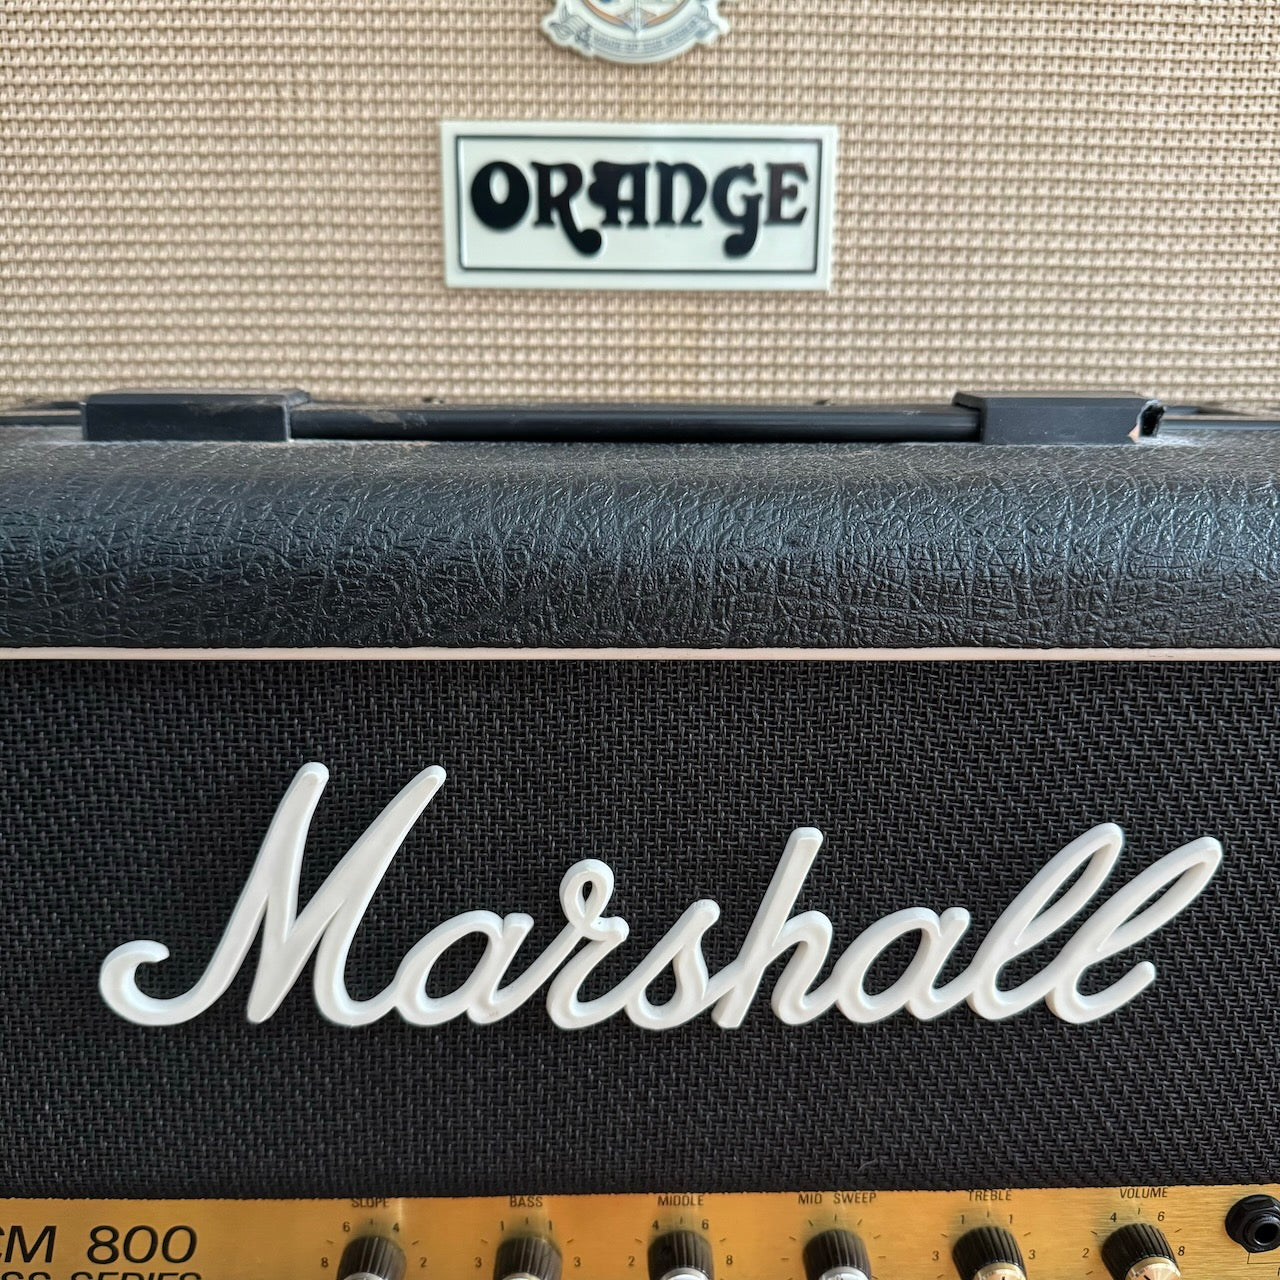 Vintage 1987 Marshall JCM800 Super Bass MKII 100w 1992 Amplifier